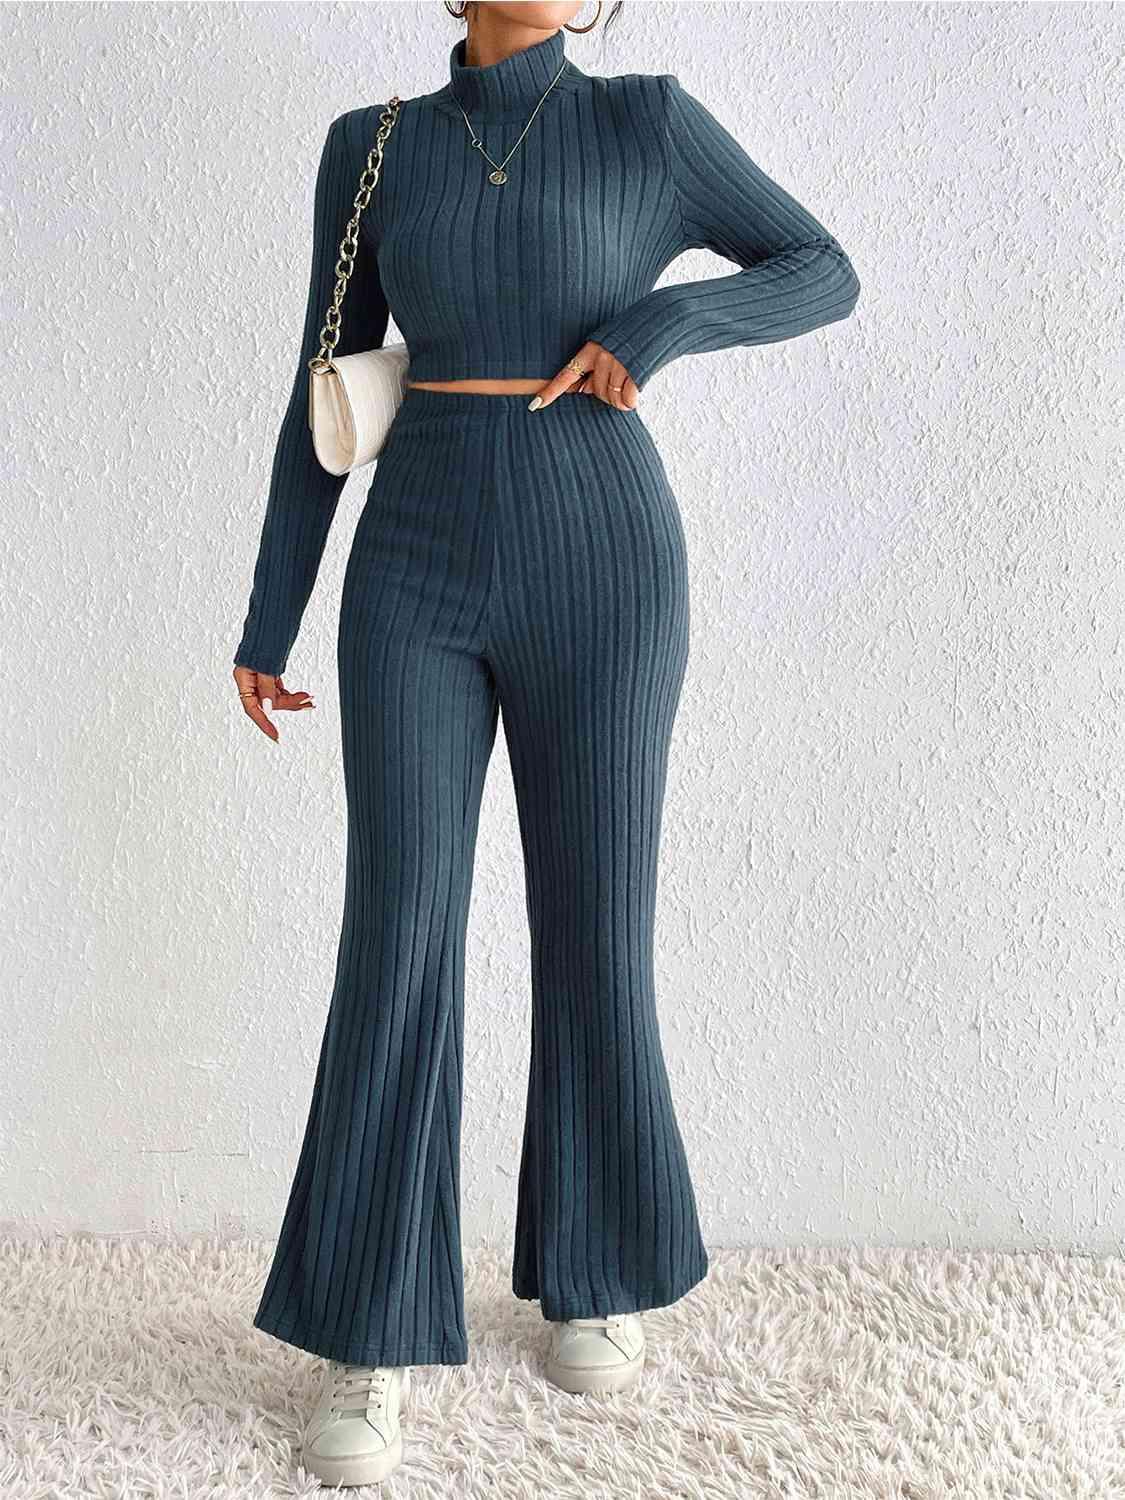 a woman wearing a blue rib knit set